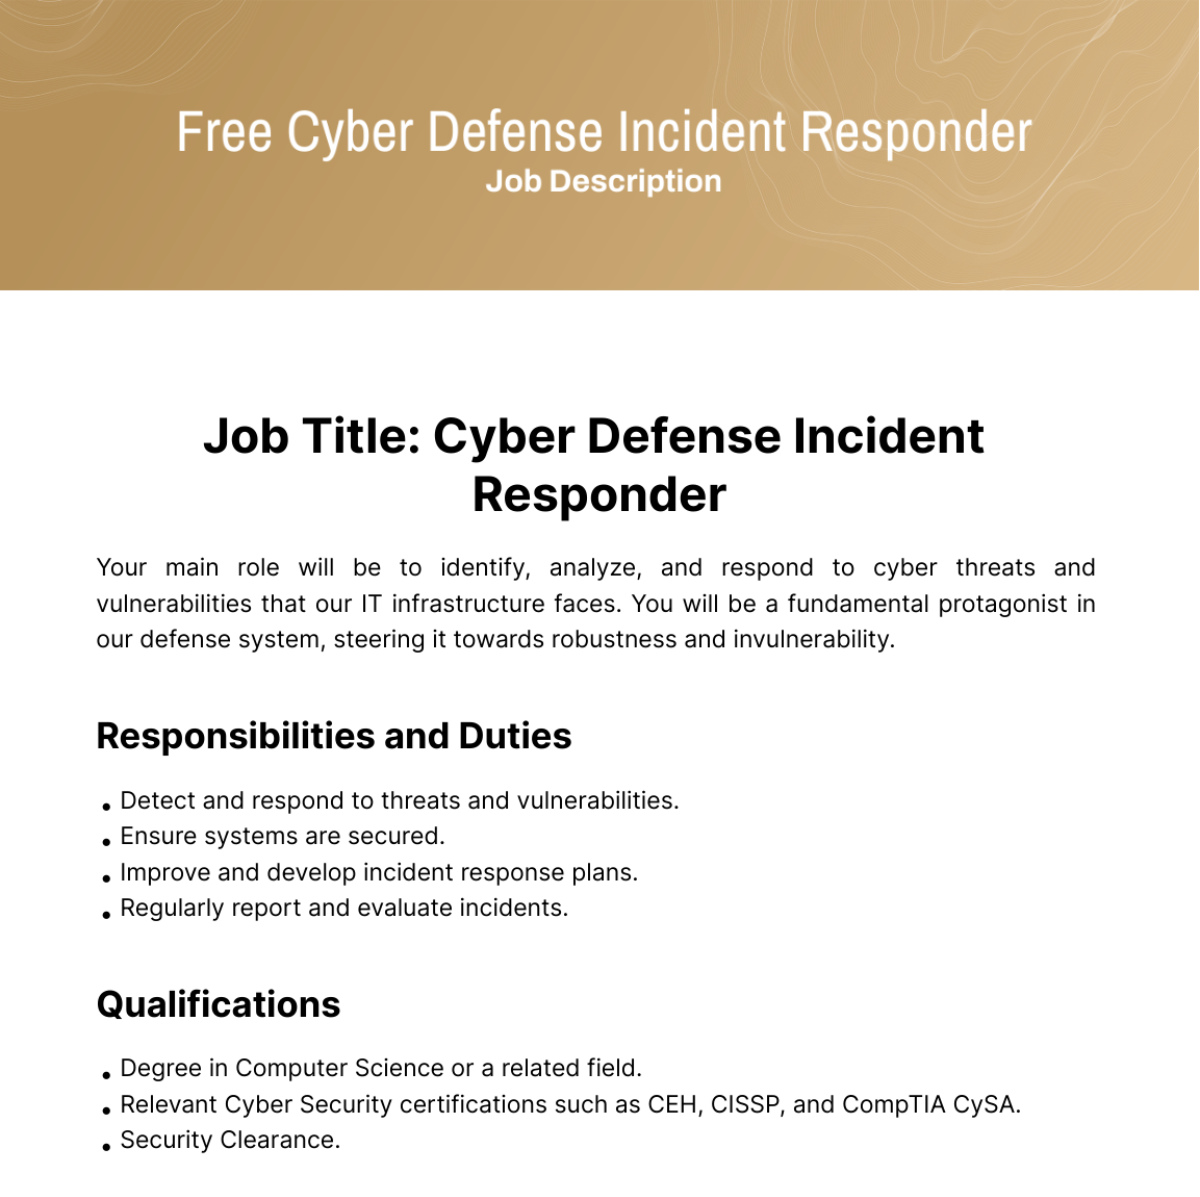 Free Cyber Defense Incident Responder Job Description Template